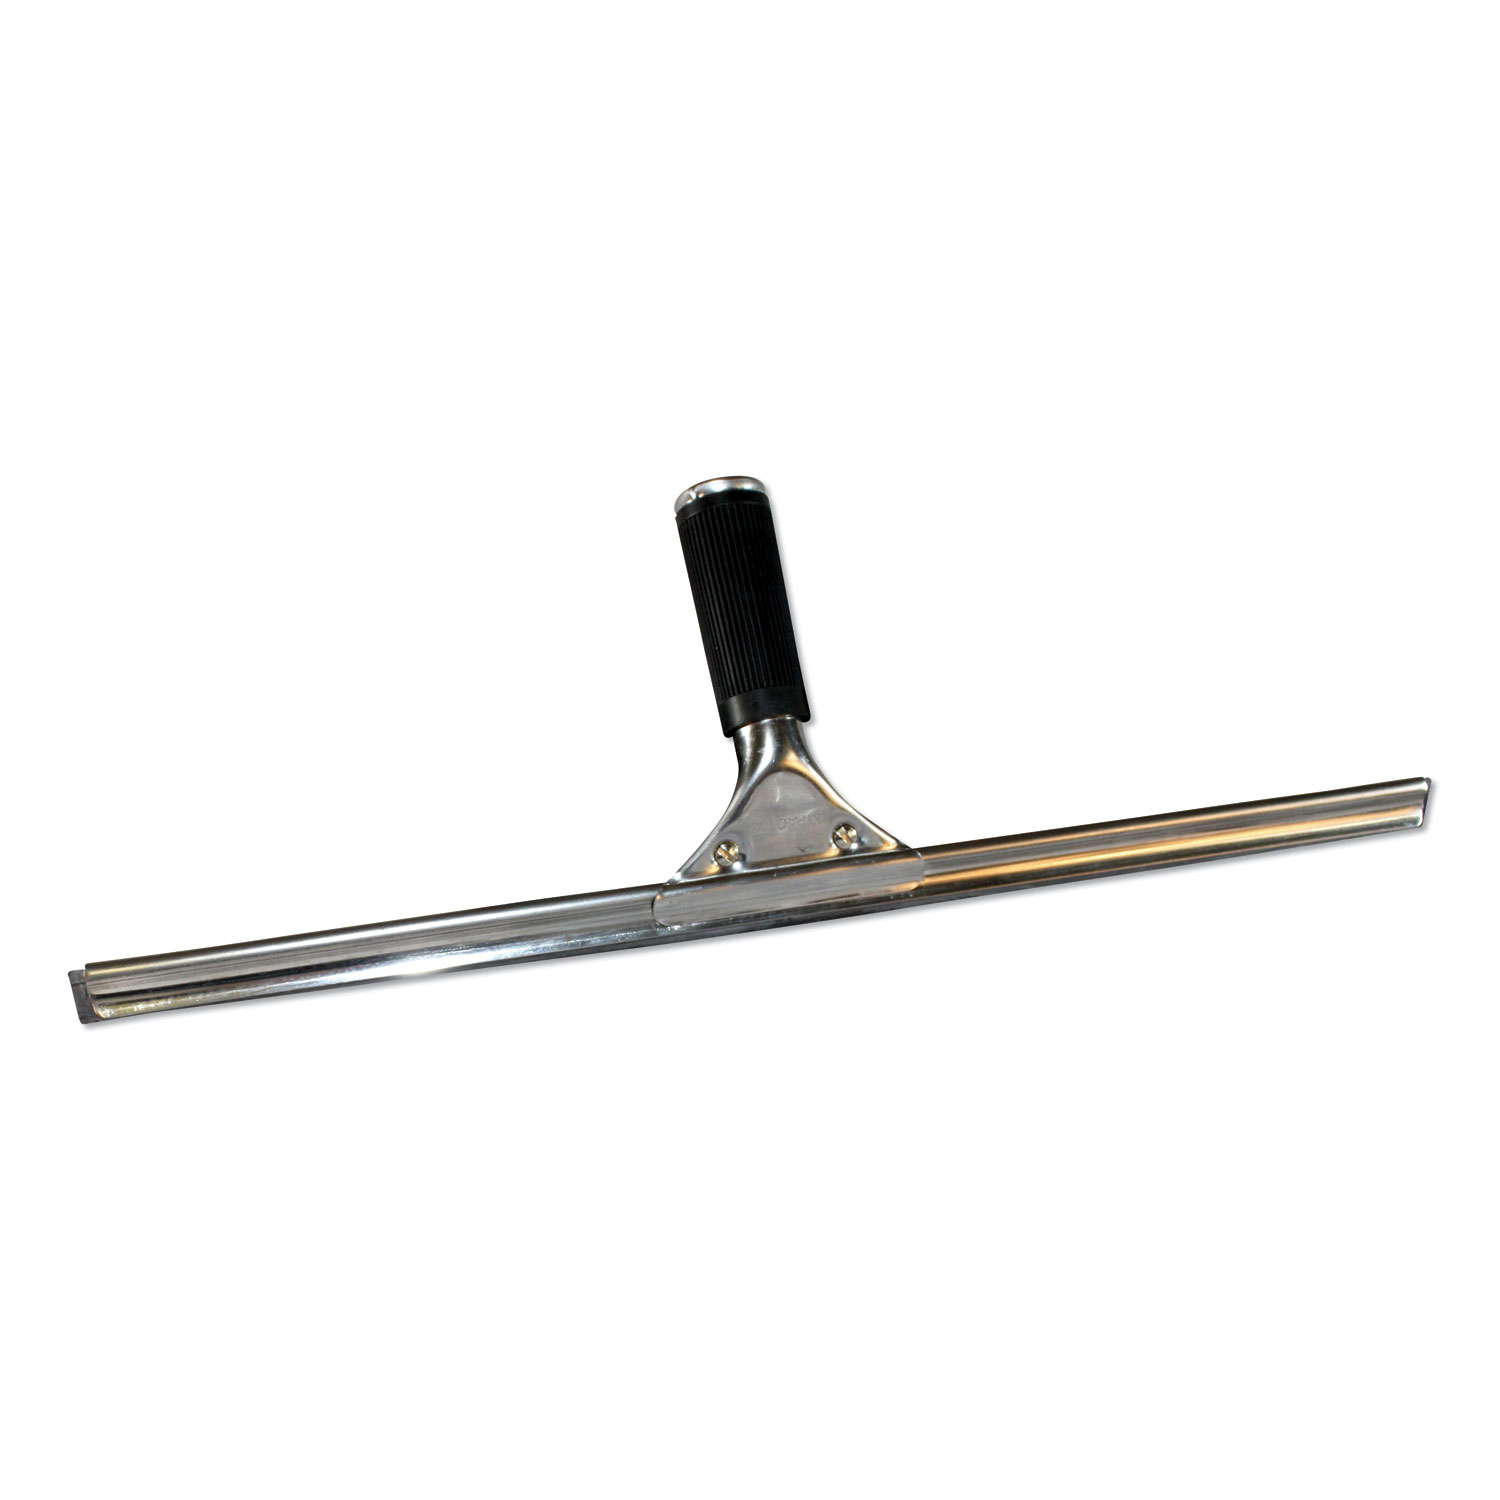  Impact IMP 6228 Stainless Steel Window Squeegee, 18 Wide Blade, 3 Rubber Grip Handle (IMP6228) 